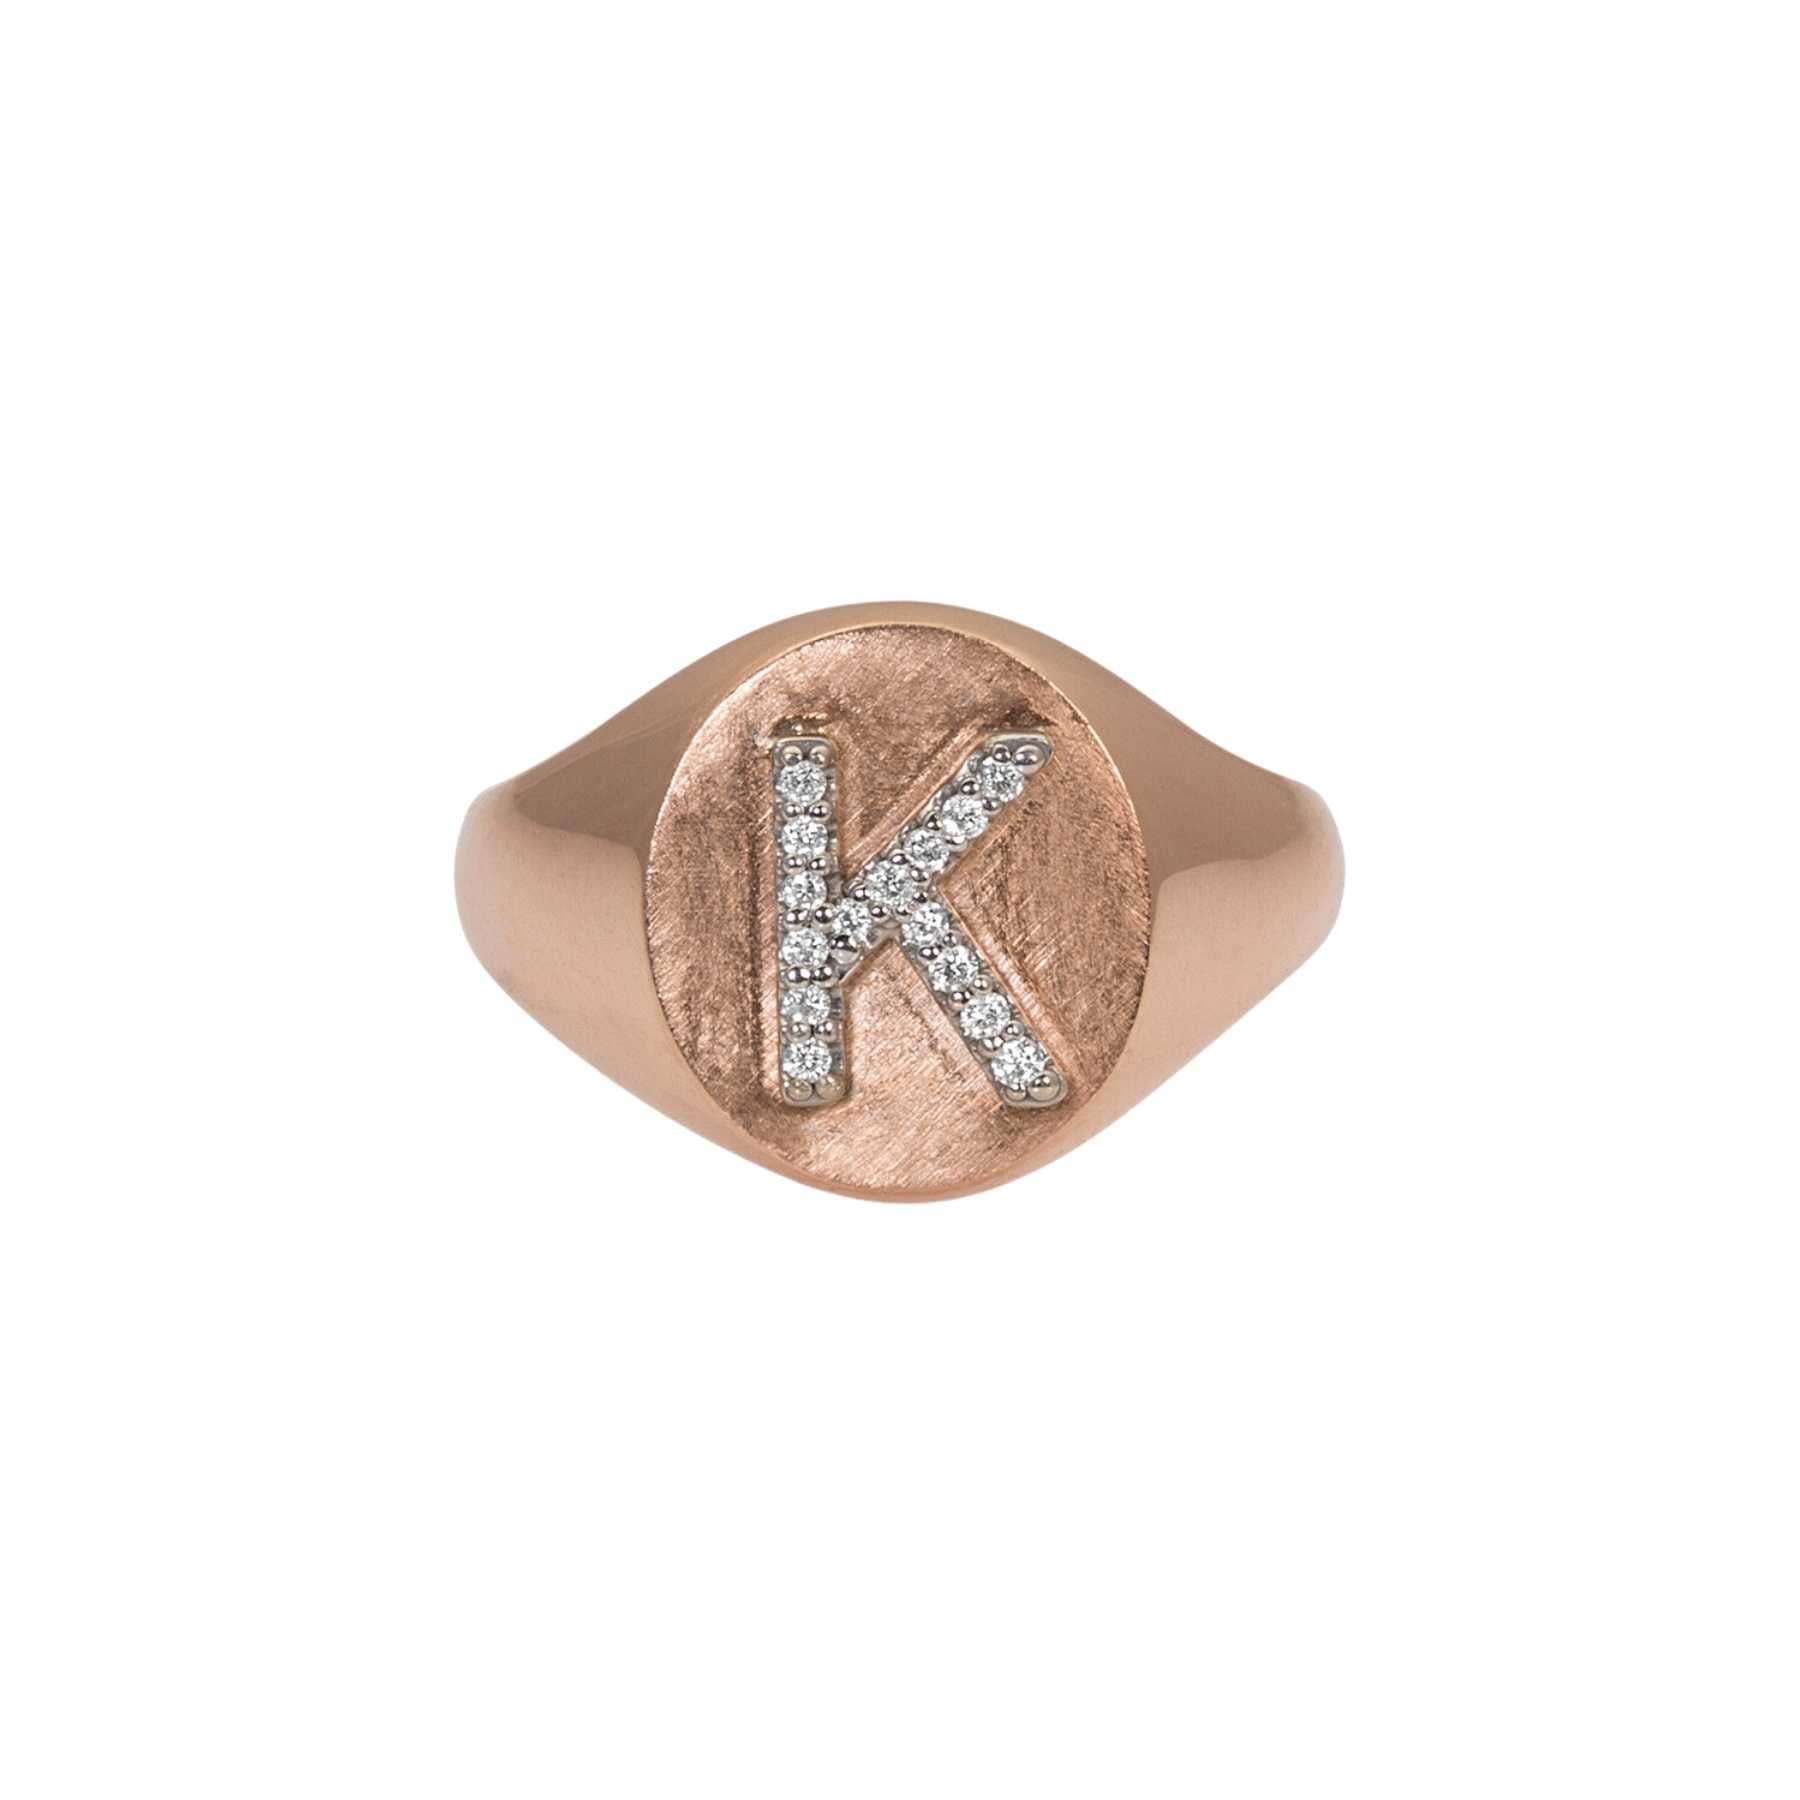 RIGG 14k Rose Gold Signet "K" Initial Ring - Size 5.5